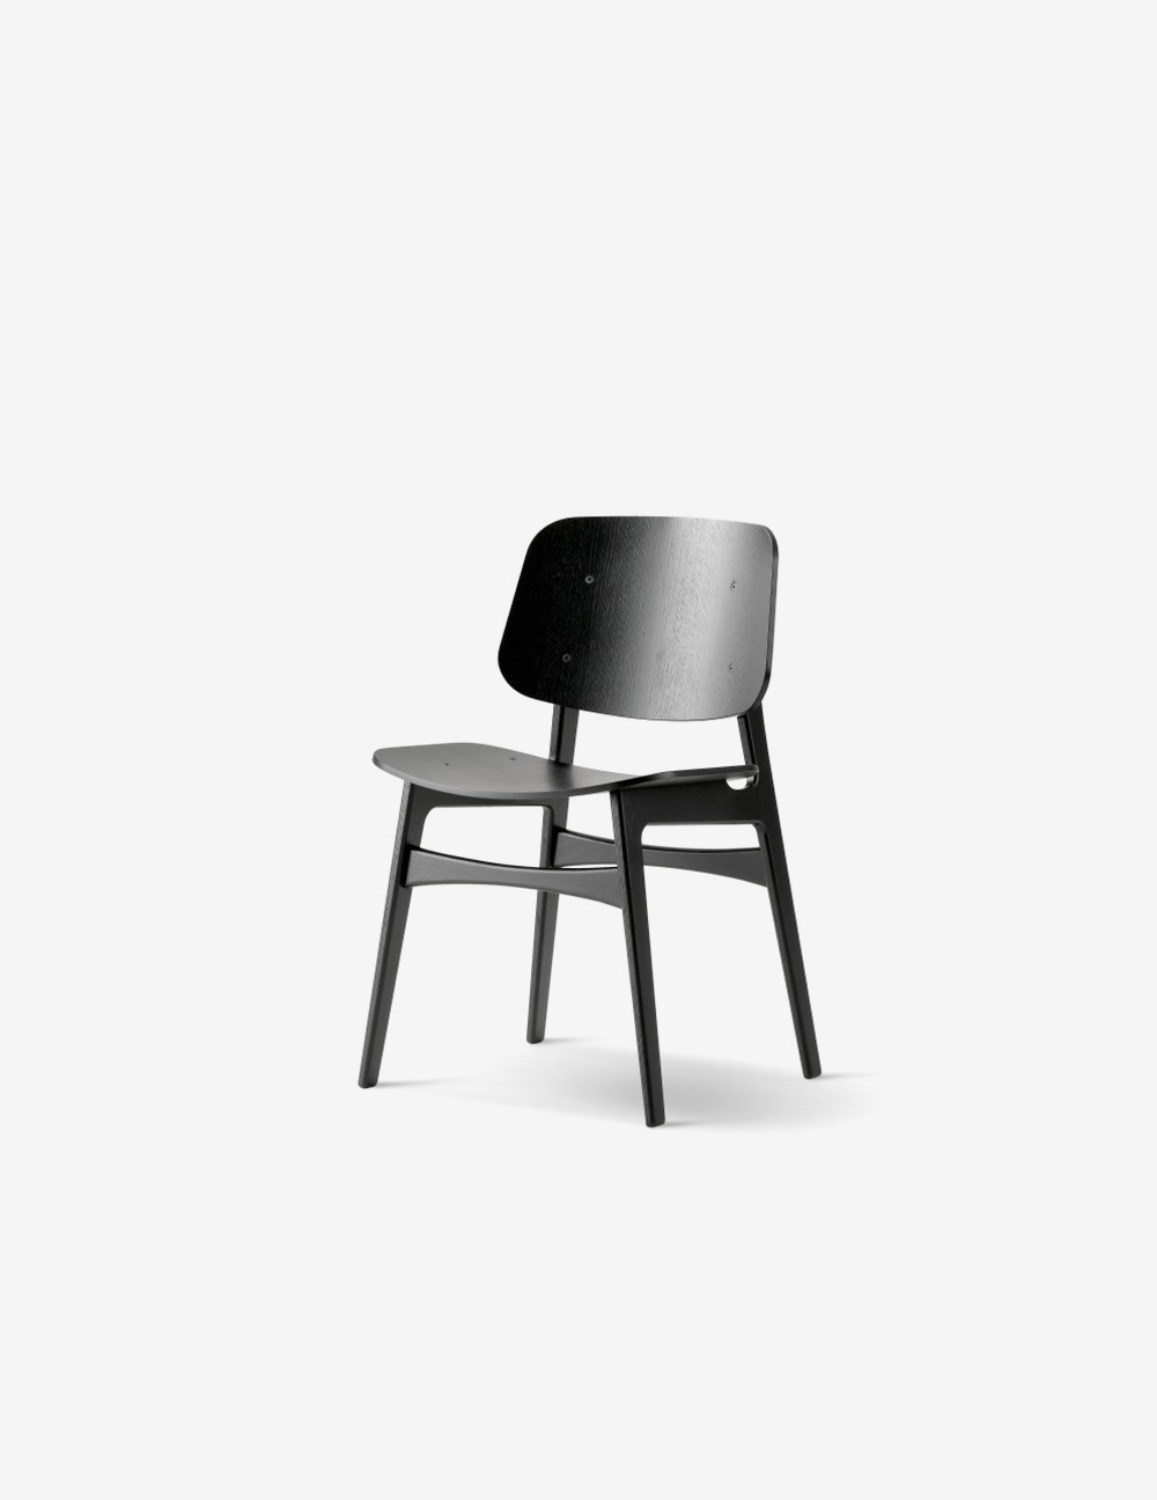 [Fredericia] Soborg chair (Woodbase) /3050